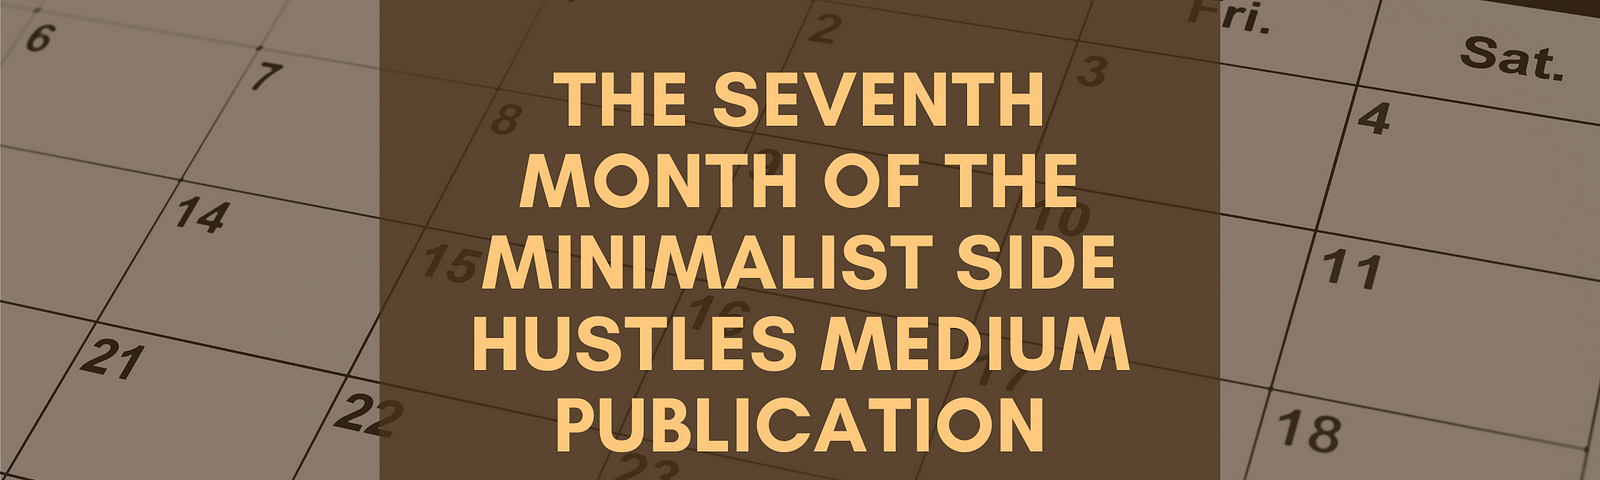 The Seventh Month of the Minimalist Side Hustles Medium Publication